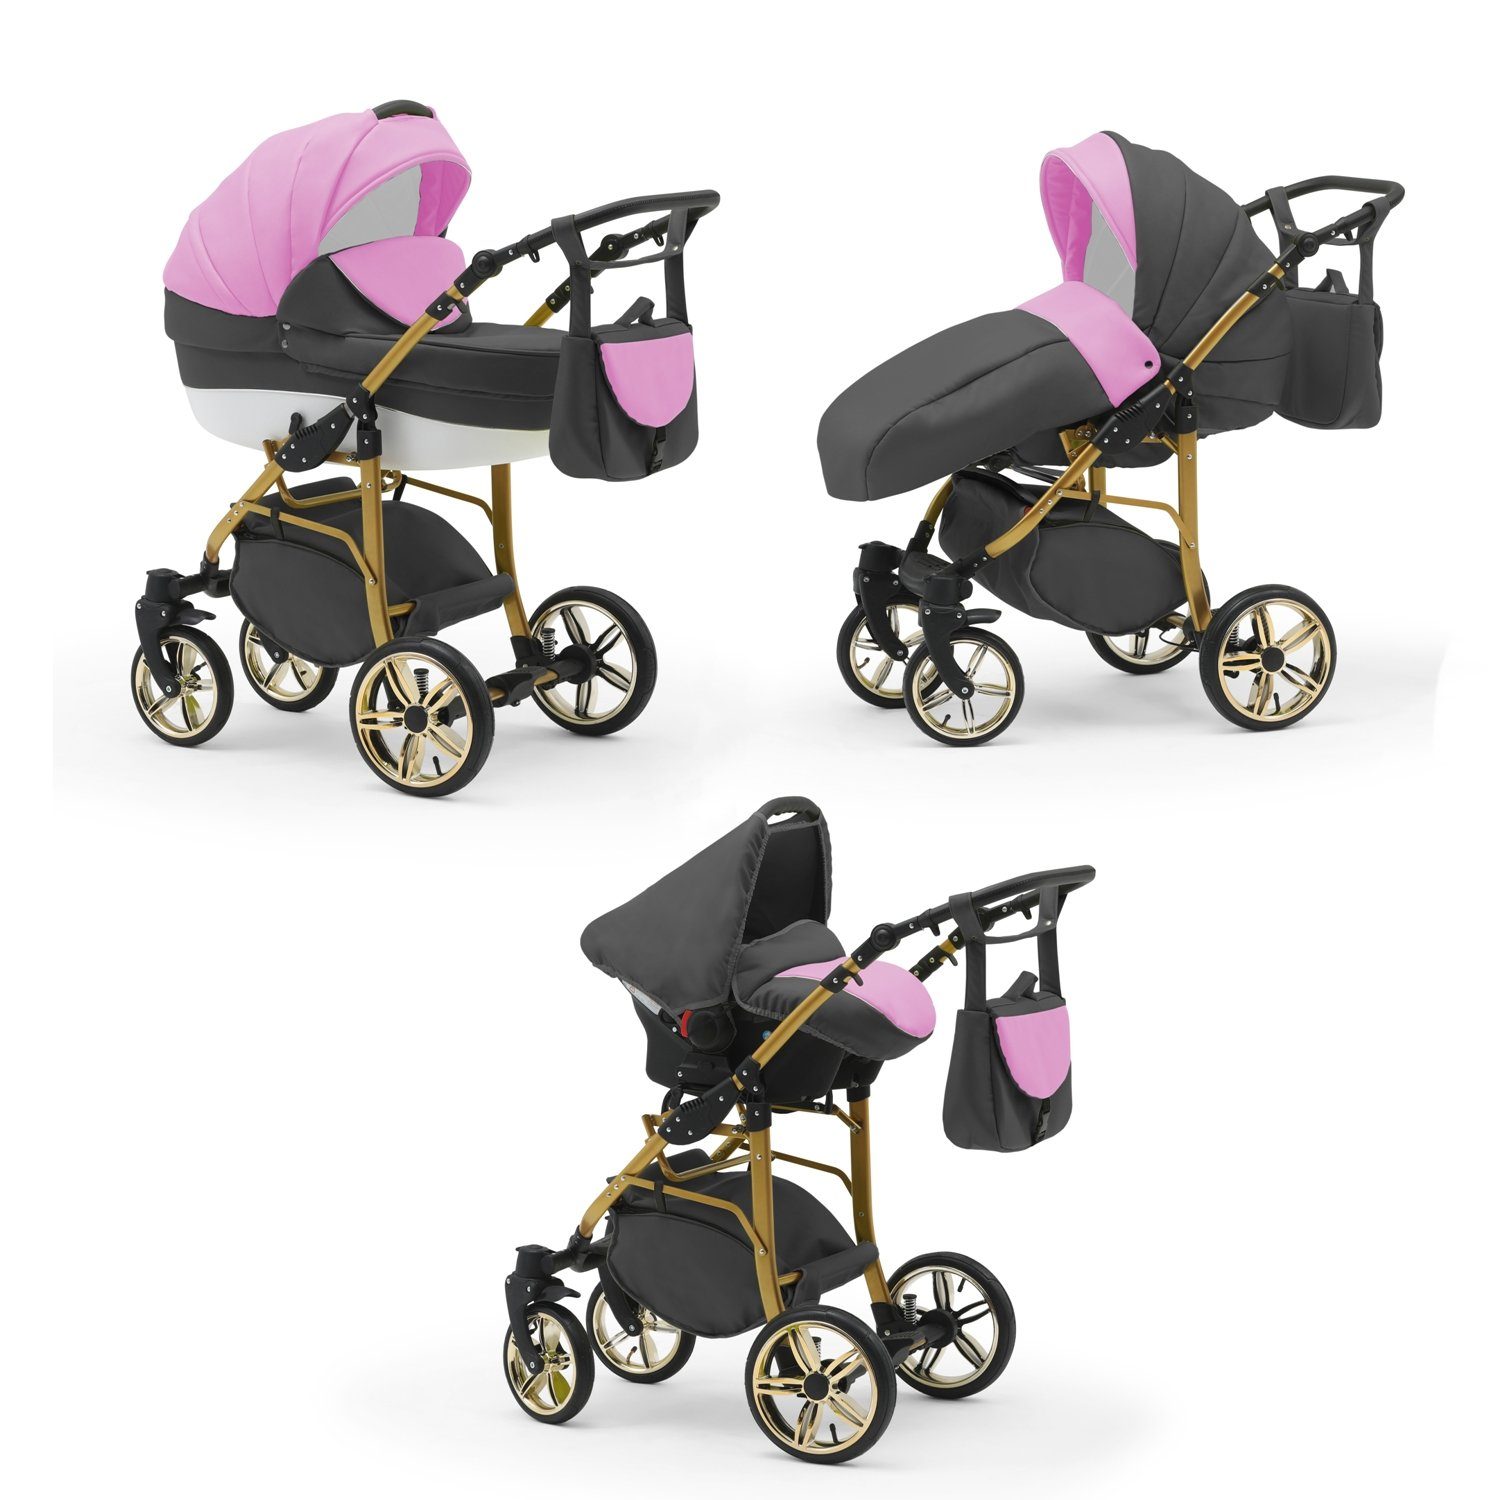 Kinderwagen-Set Pink-Weiß-Grau in Farben 1 Kombi-Kinderwagen in 3 46 16 - Teile Gold- Cosmo babies-on-wheels